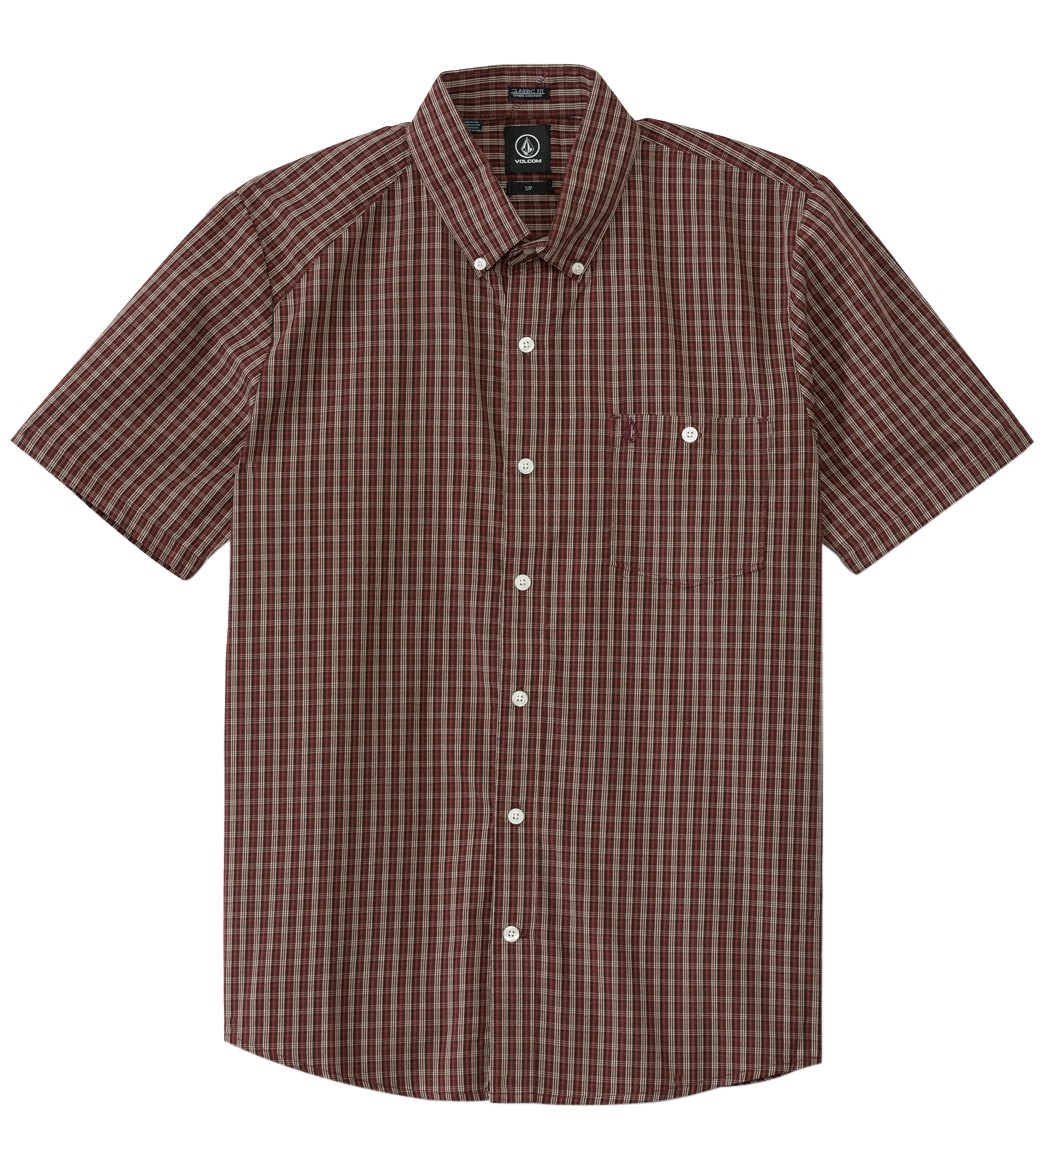 Volcom Men's Everett Mini Check S/S Shirt - Cherrywood Small Cotton/Polyester - Swimoutlet.com